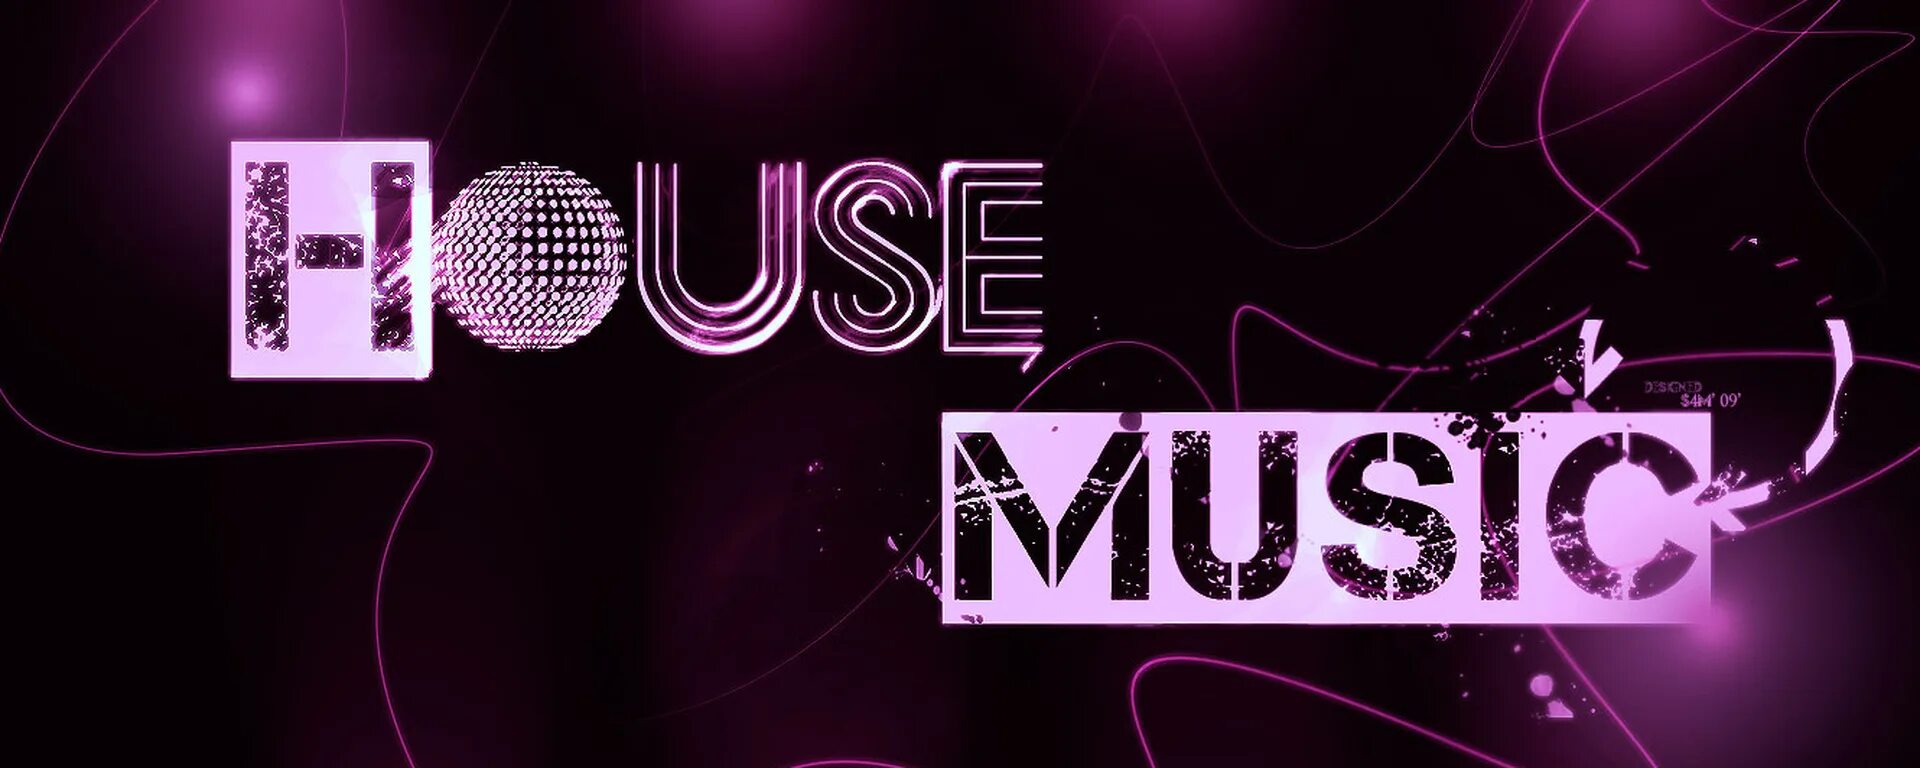 Песня house music. Хаус Мьюзик. House Music картинки. Хаус стиль музыки. House Music обложка.